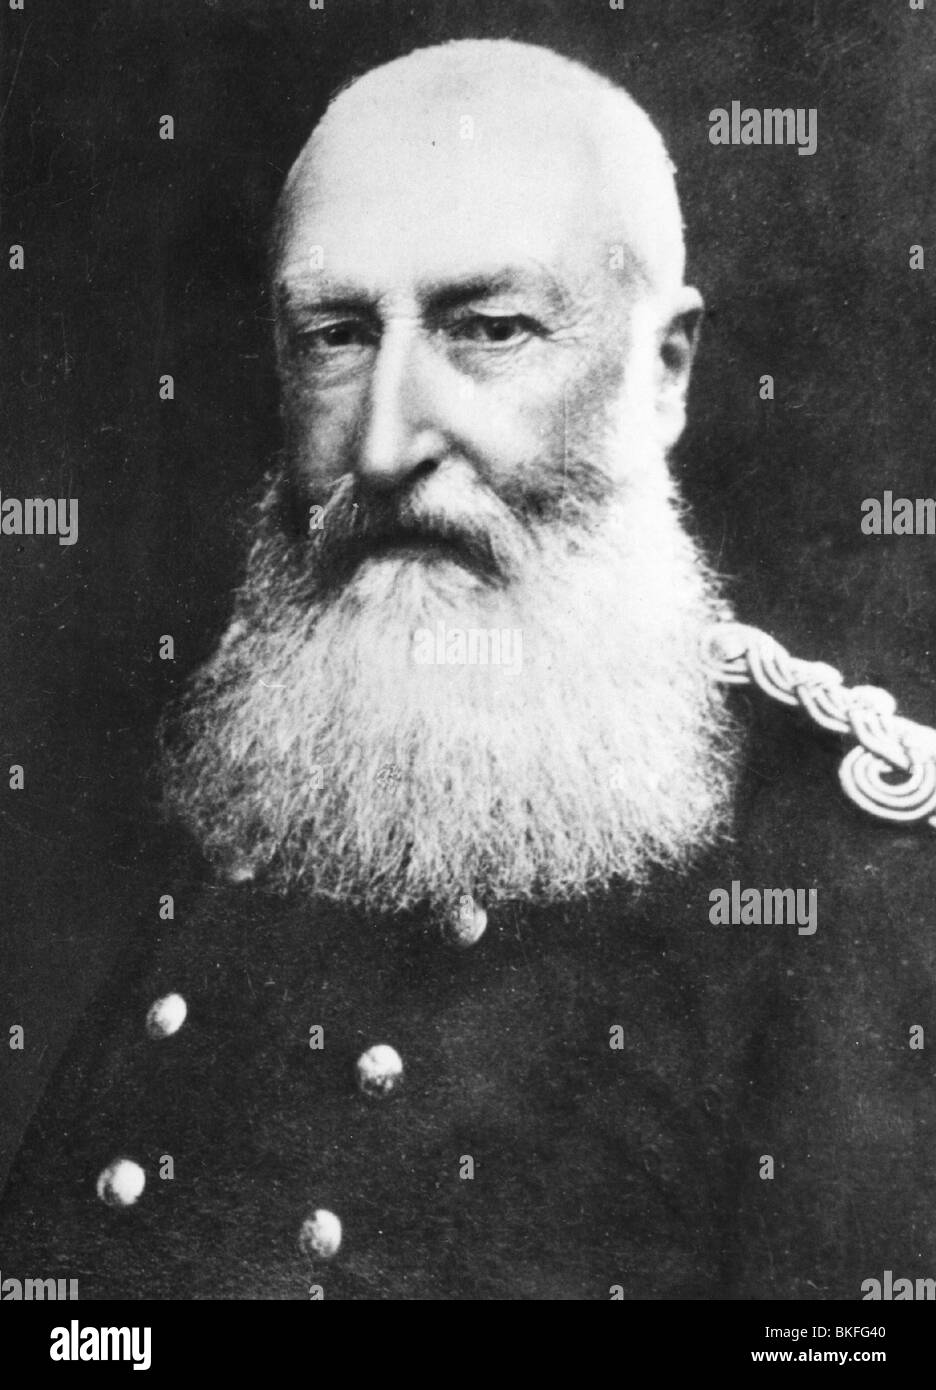 Leopold II, 9.4.1835 - 17.12 1909, King of Belgium 1865 - 1909, portrait, circa 1900, Stock Photo